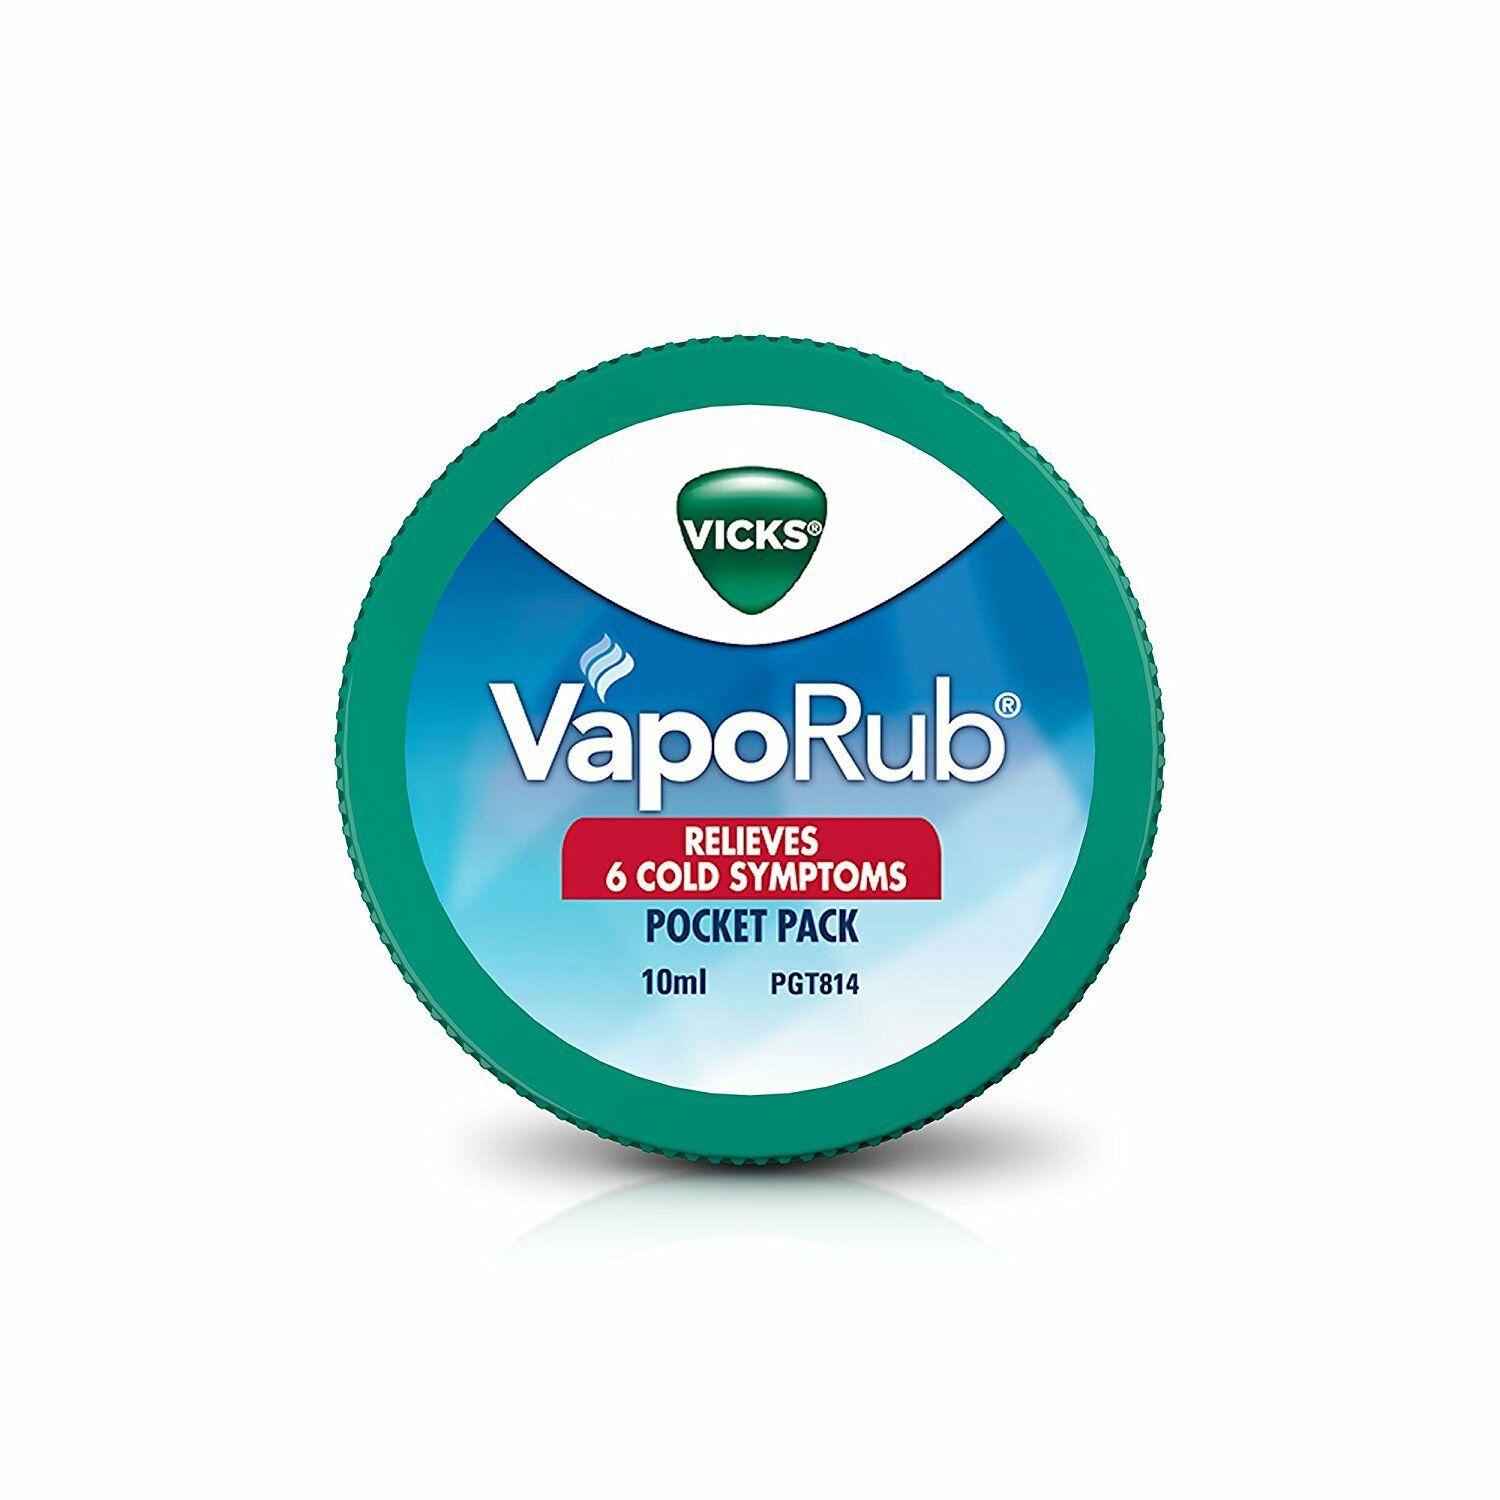 VAPORUB Pocket Pack Vicks (ВАПОРАБ, Бальзам, снимающий 6 симптомов простуды, Викс), 10 мл.